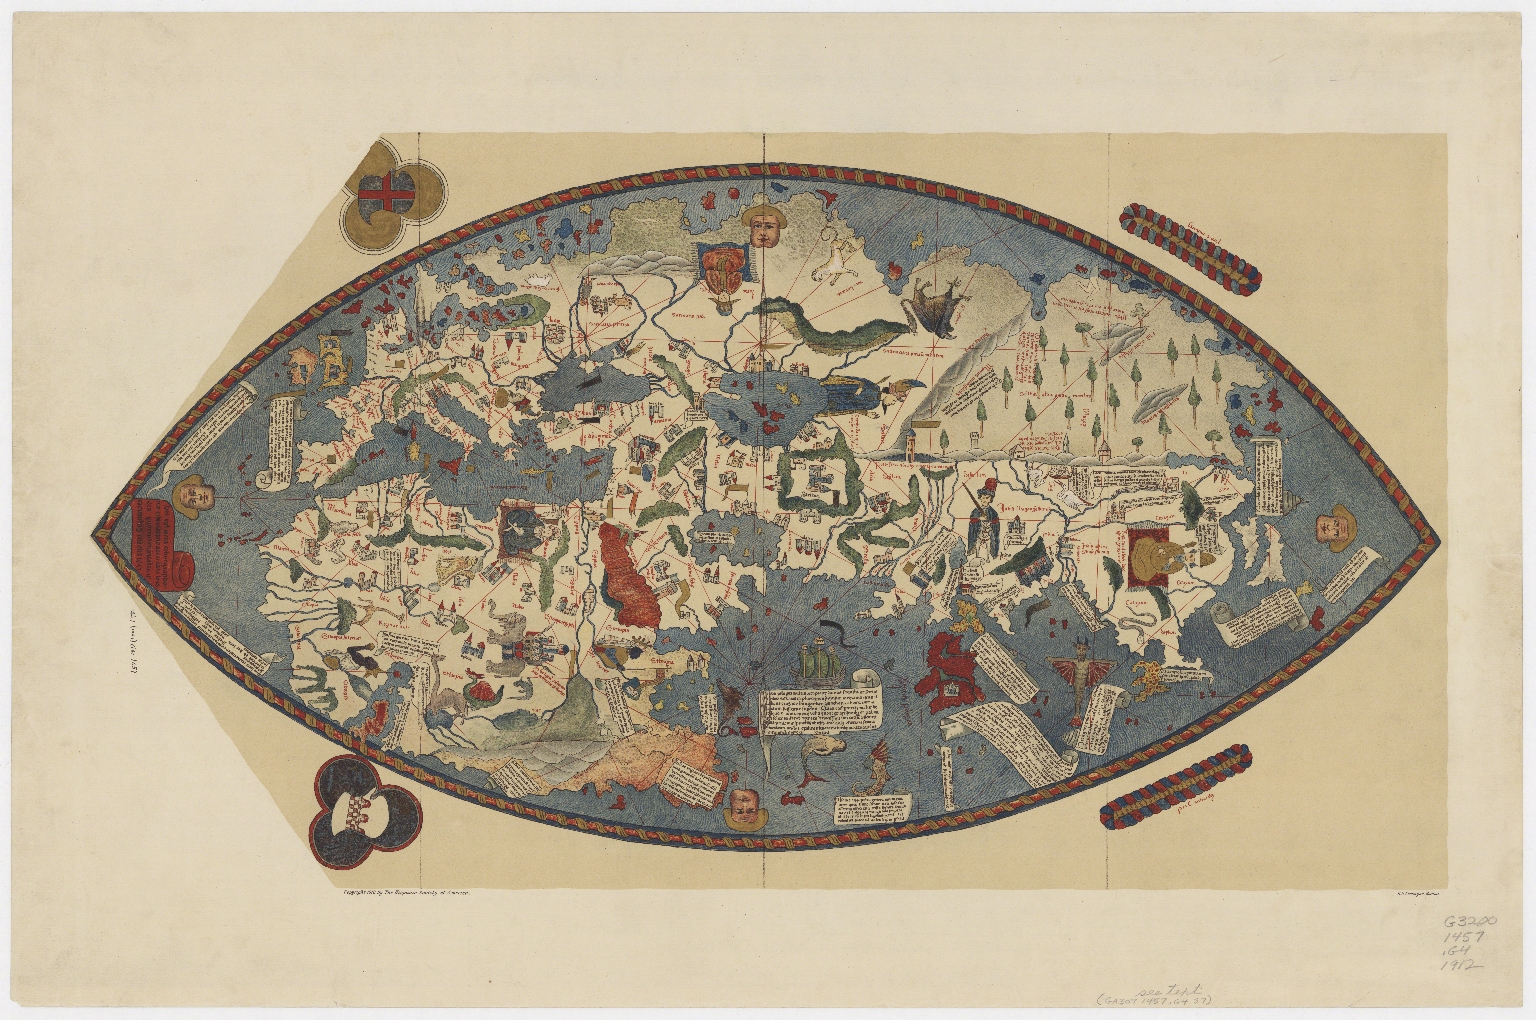 Genoese world map